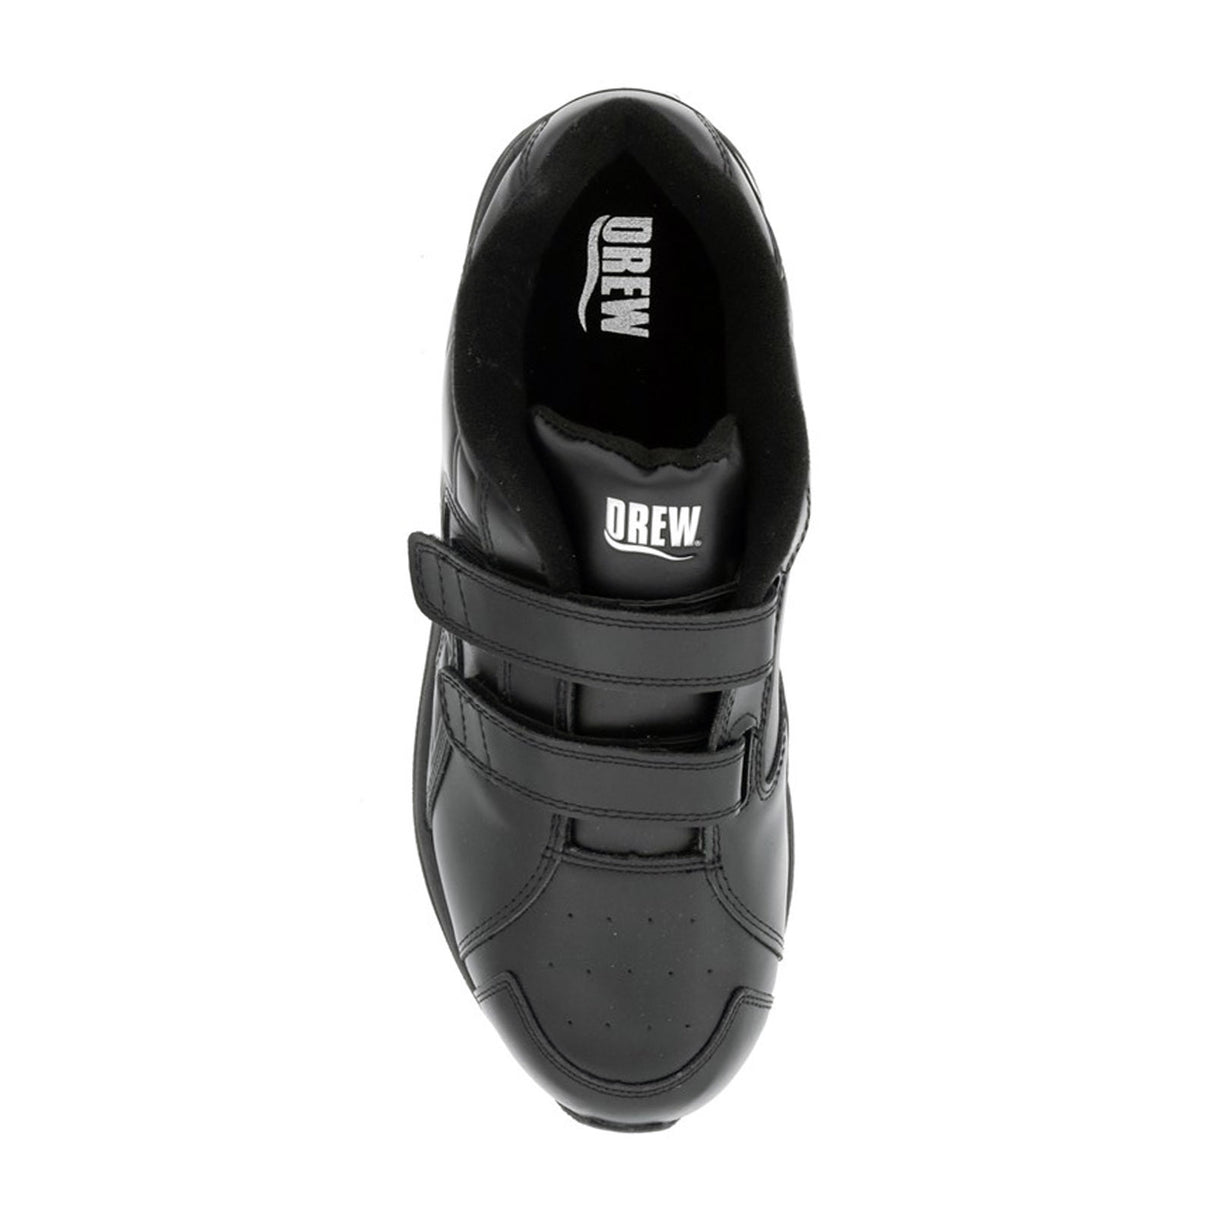 Drew Force V Hook and Loop Walking Shoe (Men) - Black Leather Athletic - Walking - The Heel Shoe Fitters